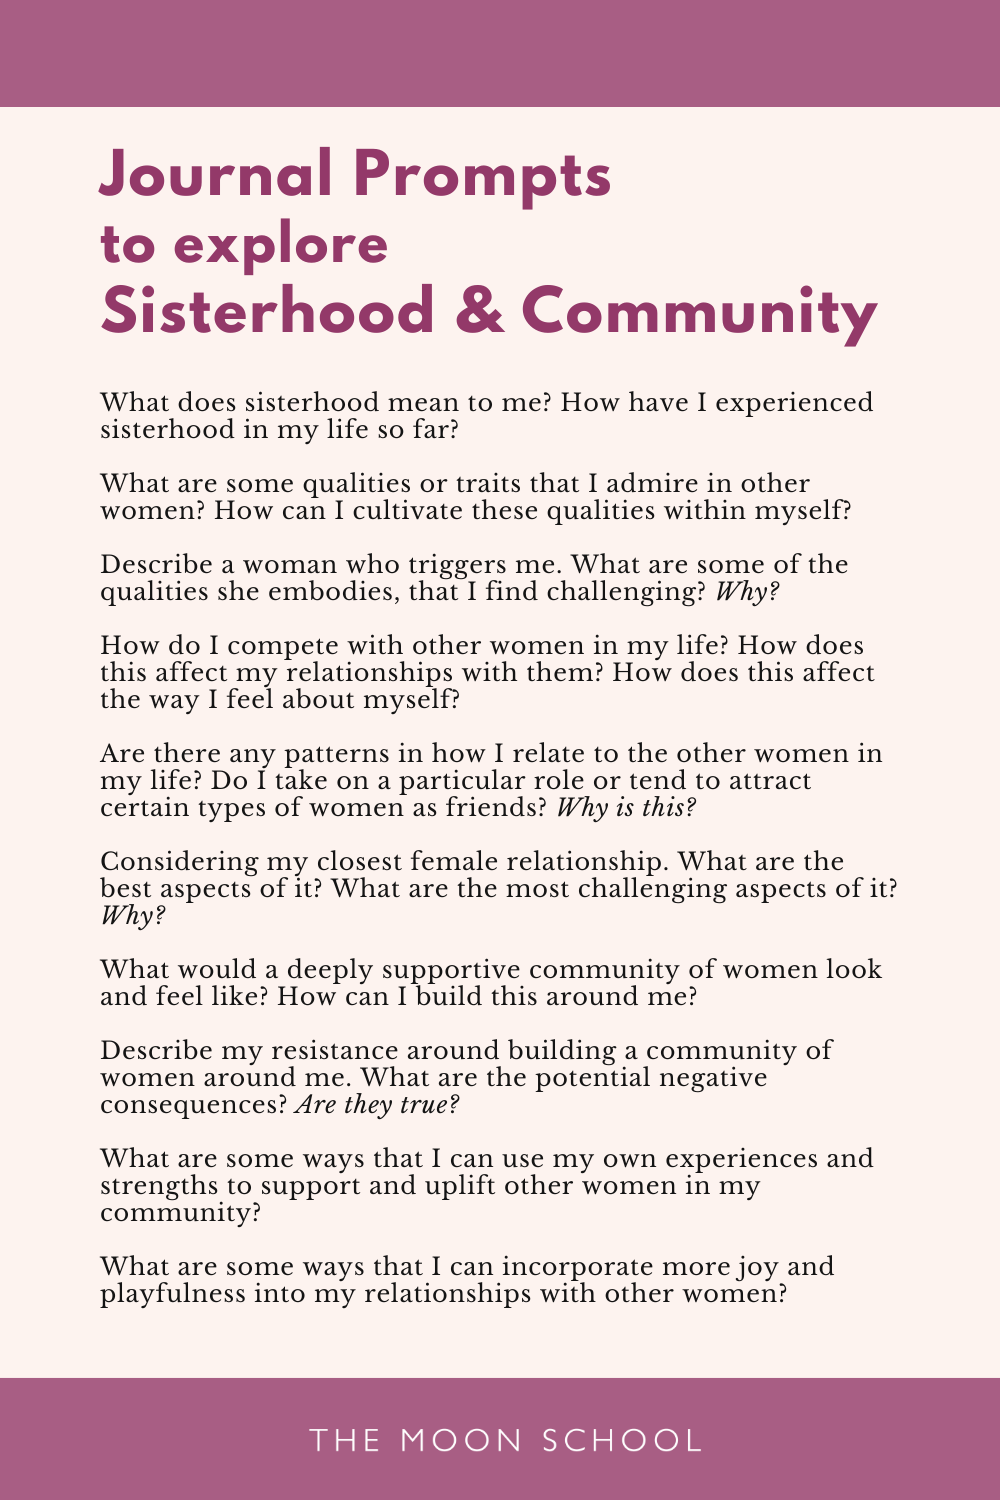 List of Journal Prompts to explore sisterhood